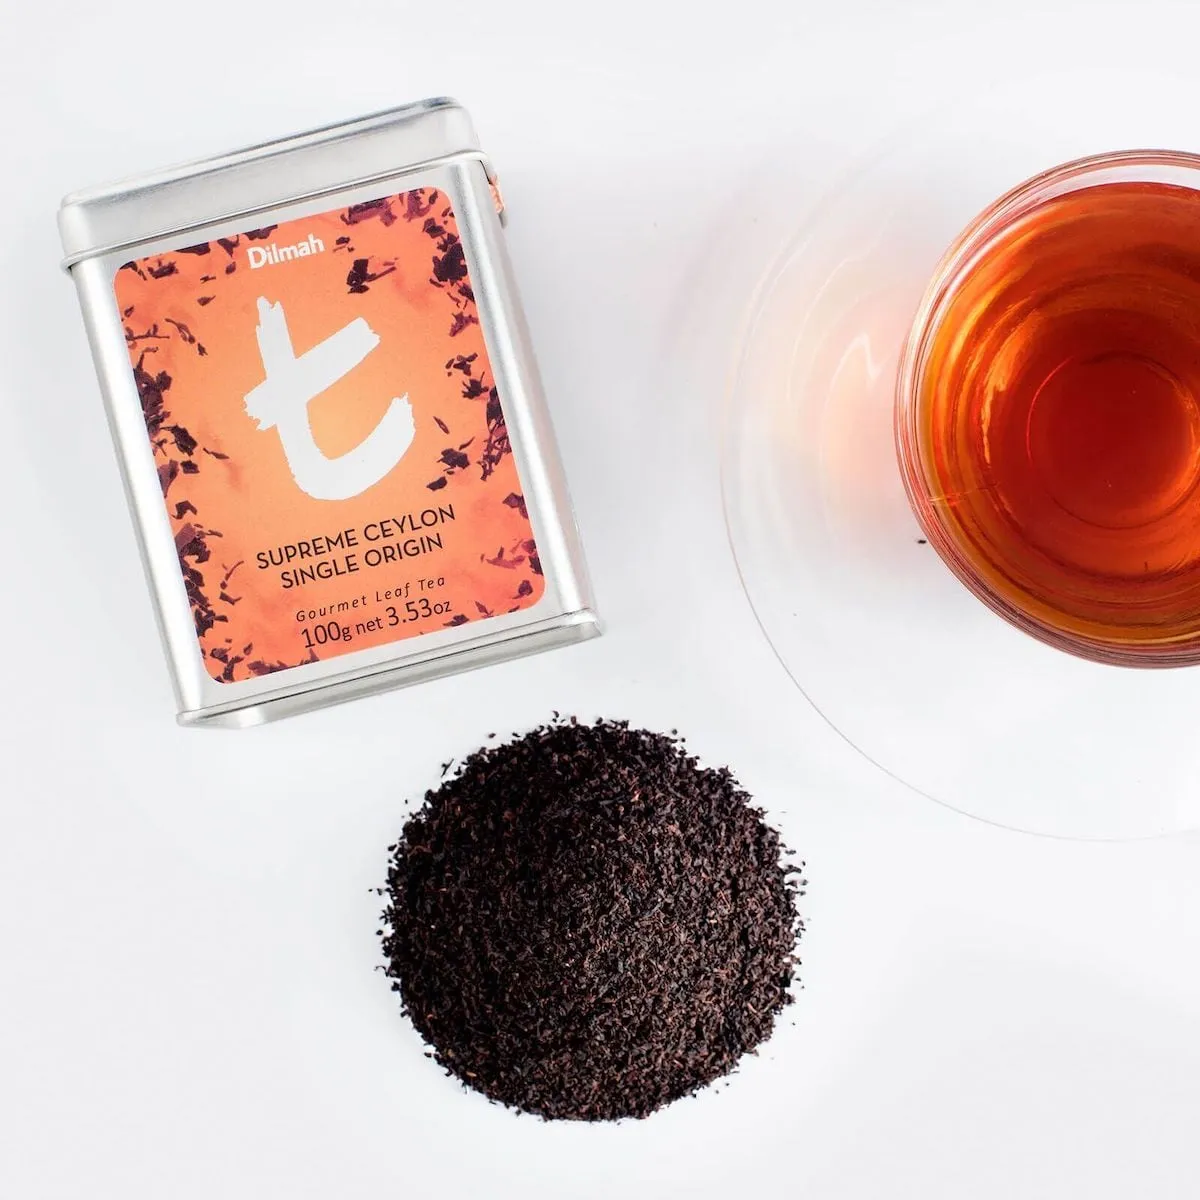 Tin, cup, and loose leaf Supreme Ceylon Single Origin tea